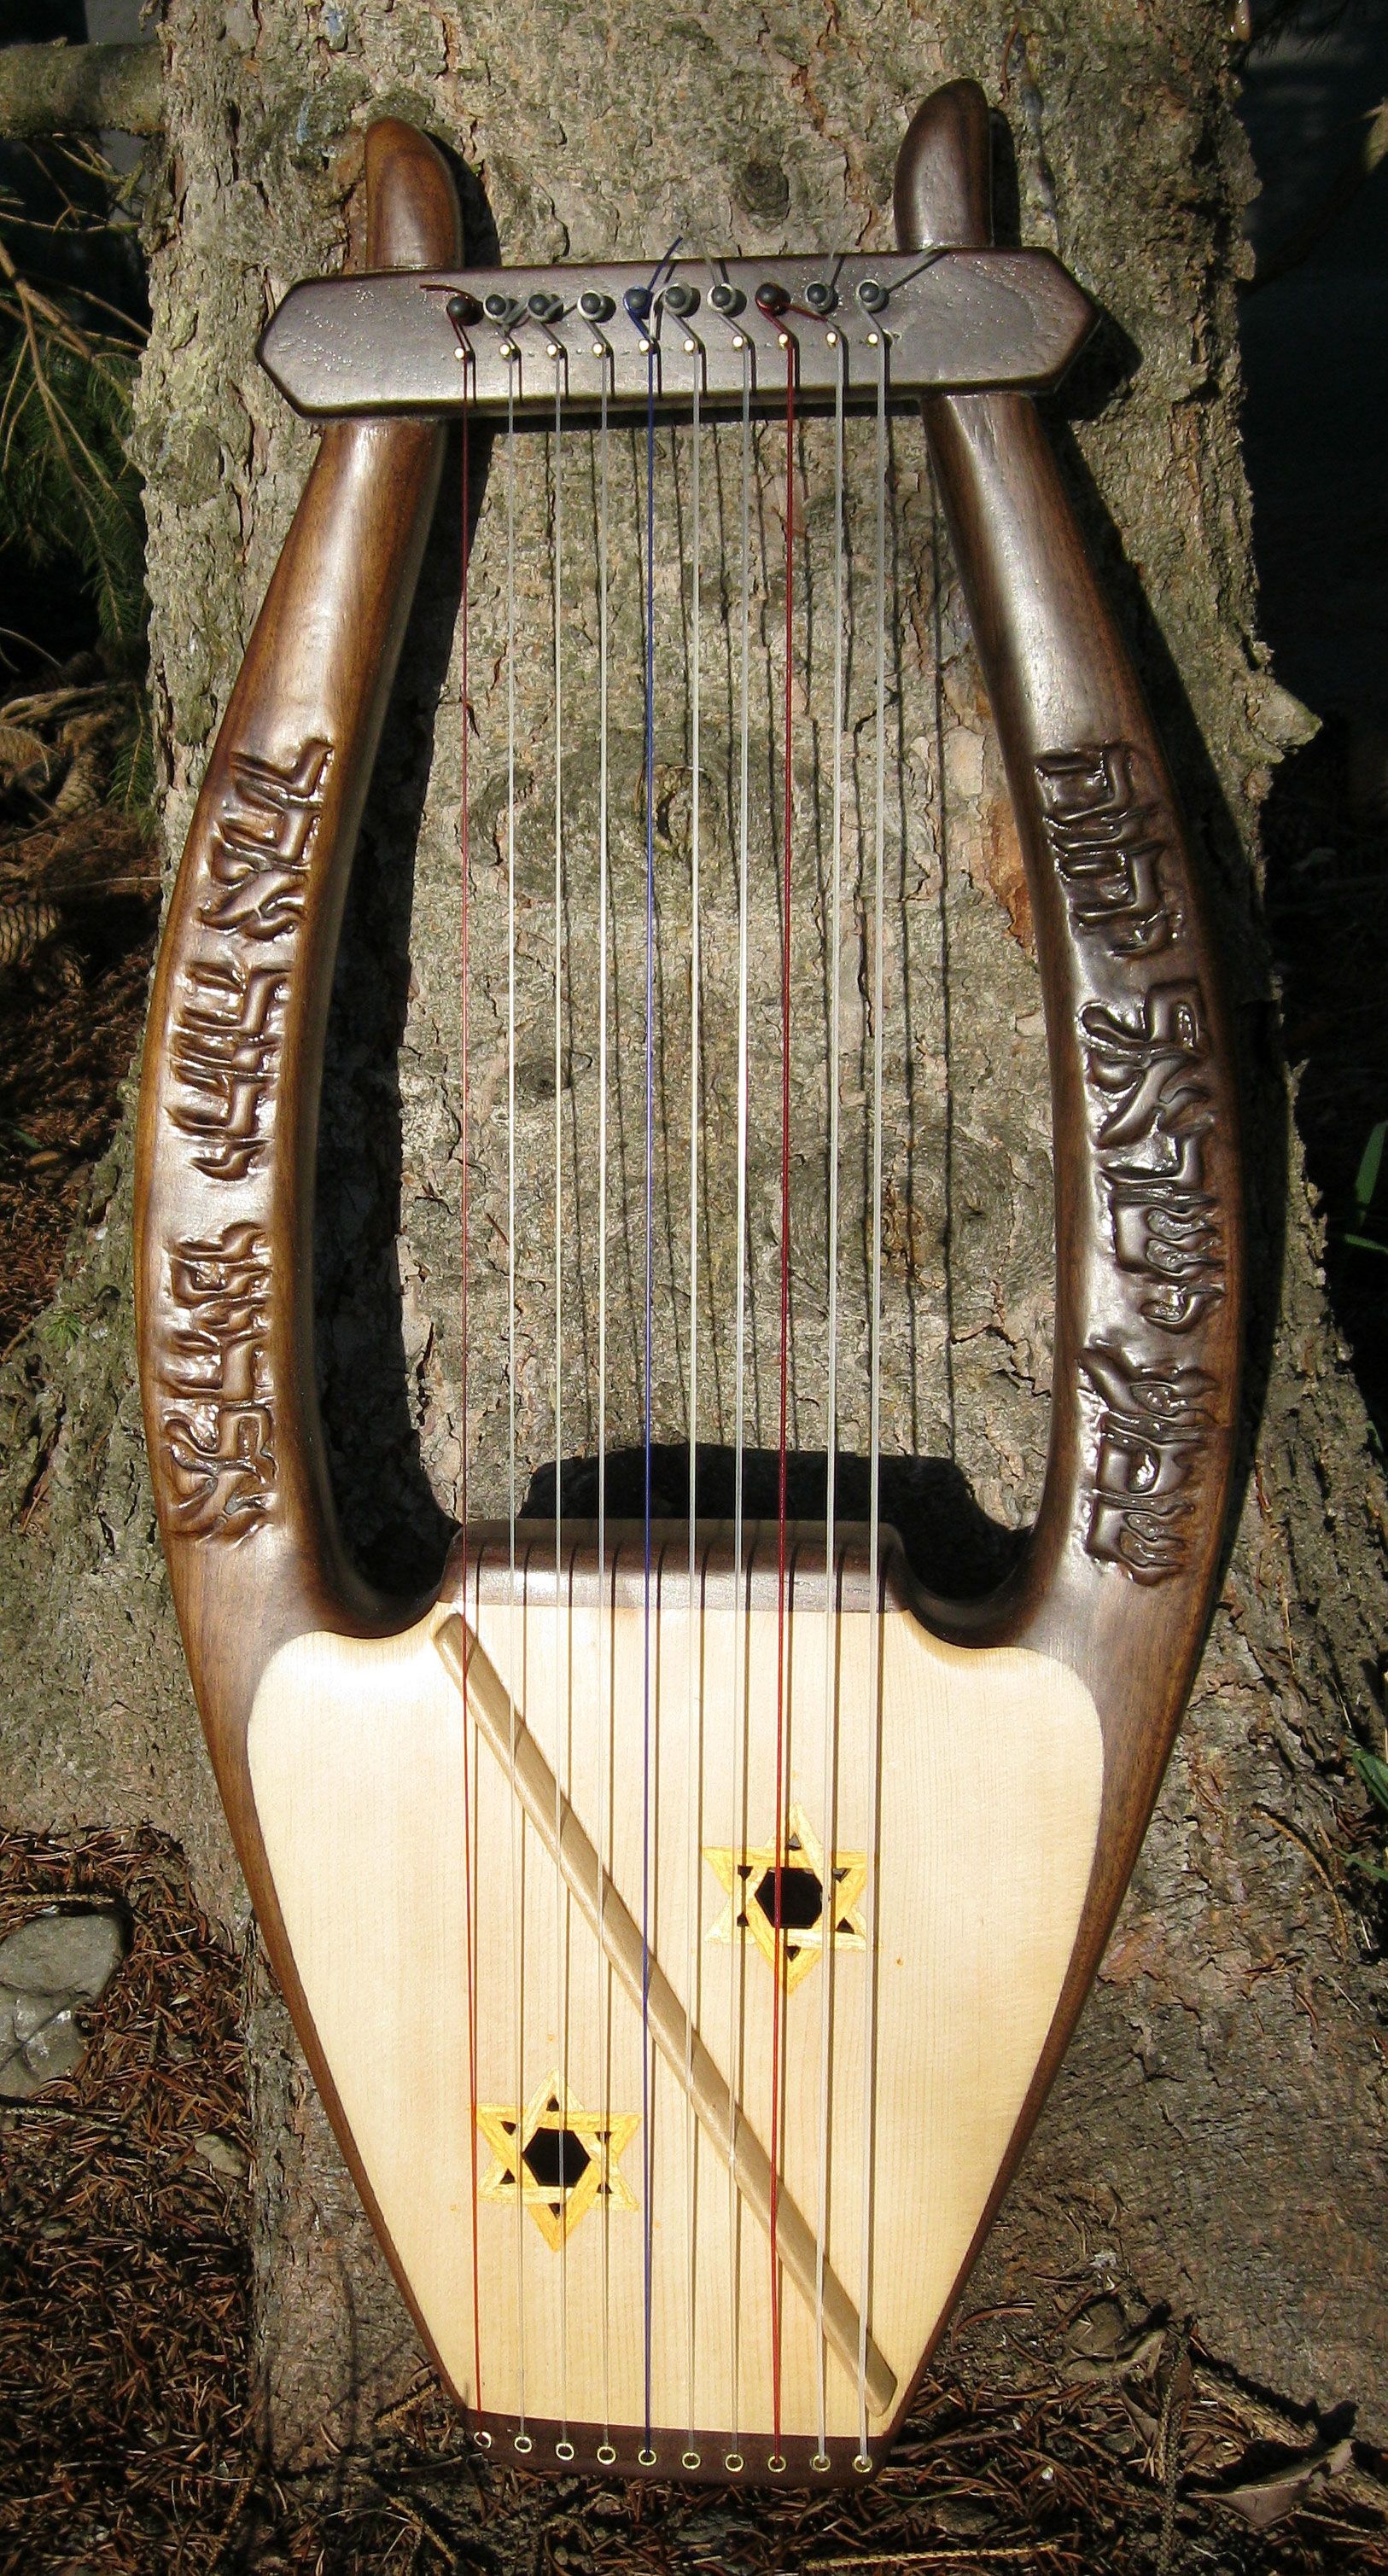 Lyre: 10 String Davidic Lyre-Kinnor, Carved From Myrtle Wood and Engelmann Spruce, Celtic Harp. 1630x3020 HD Background.